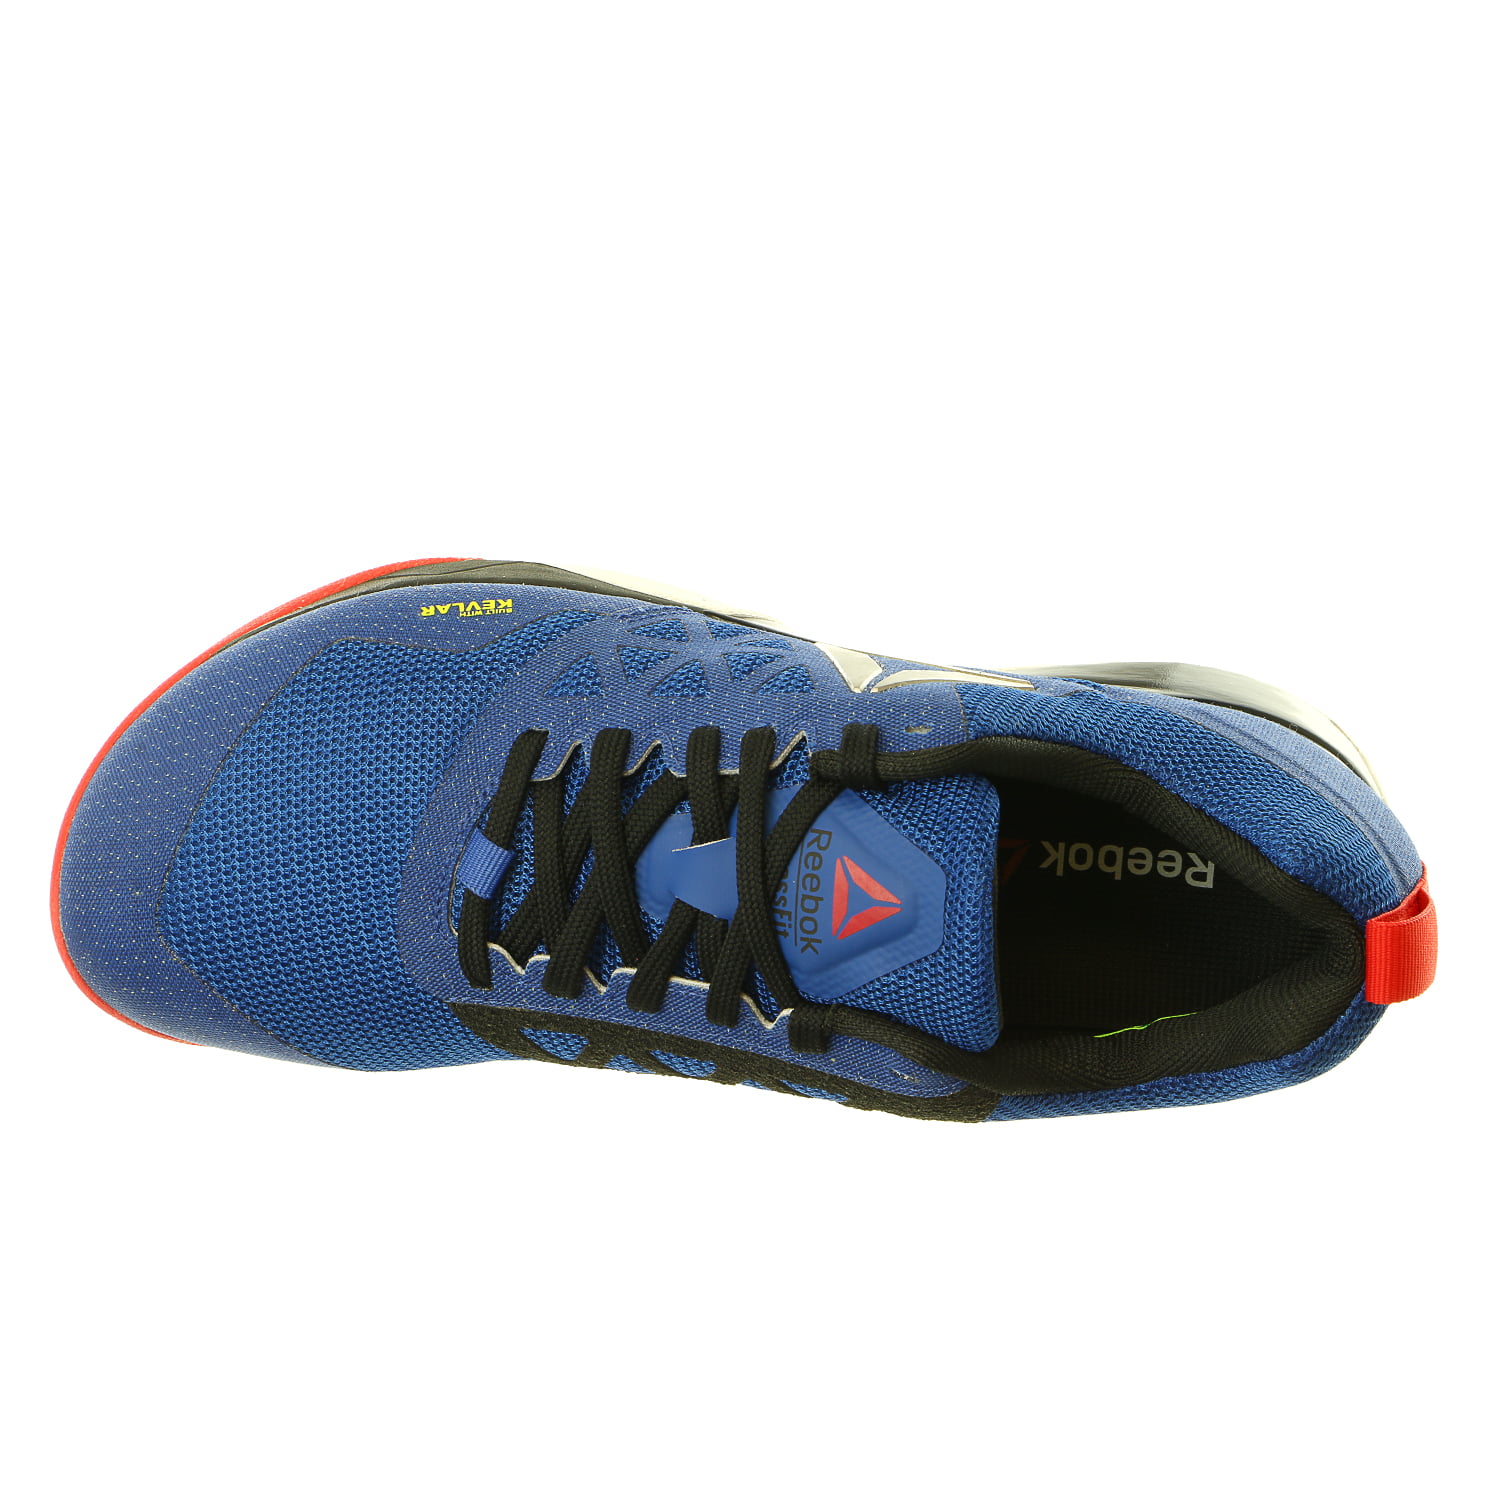 Crossfit Nano 6.0 Cross-Training Sneaker Shoe - Mens - Walmart.com